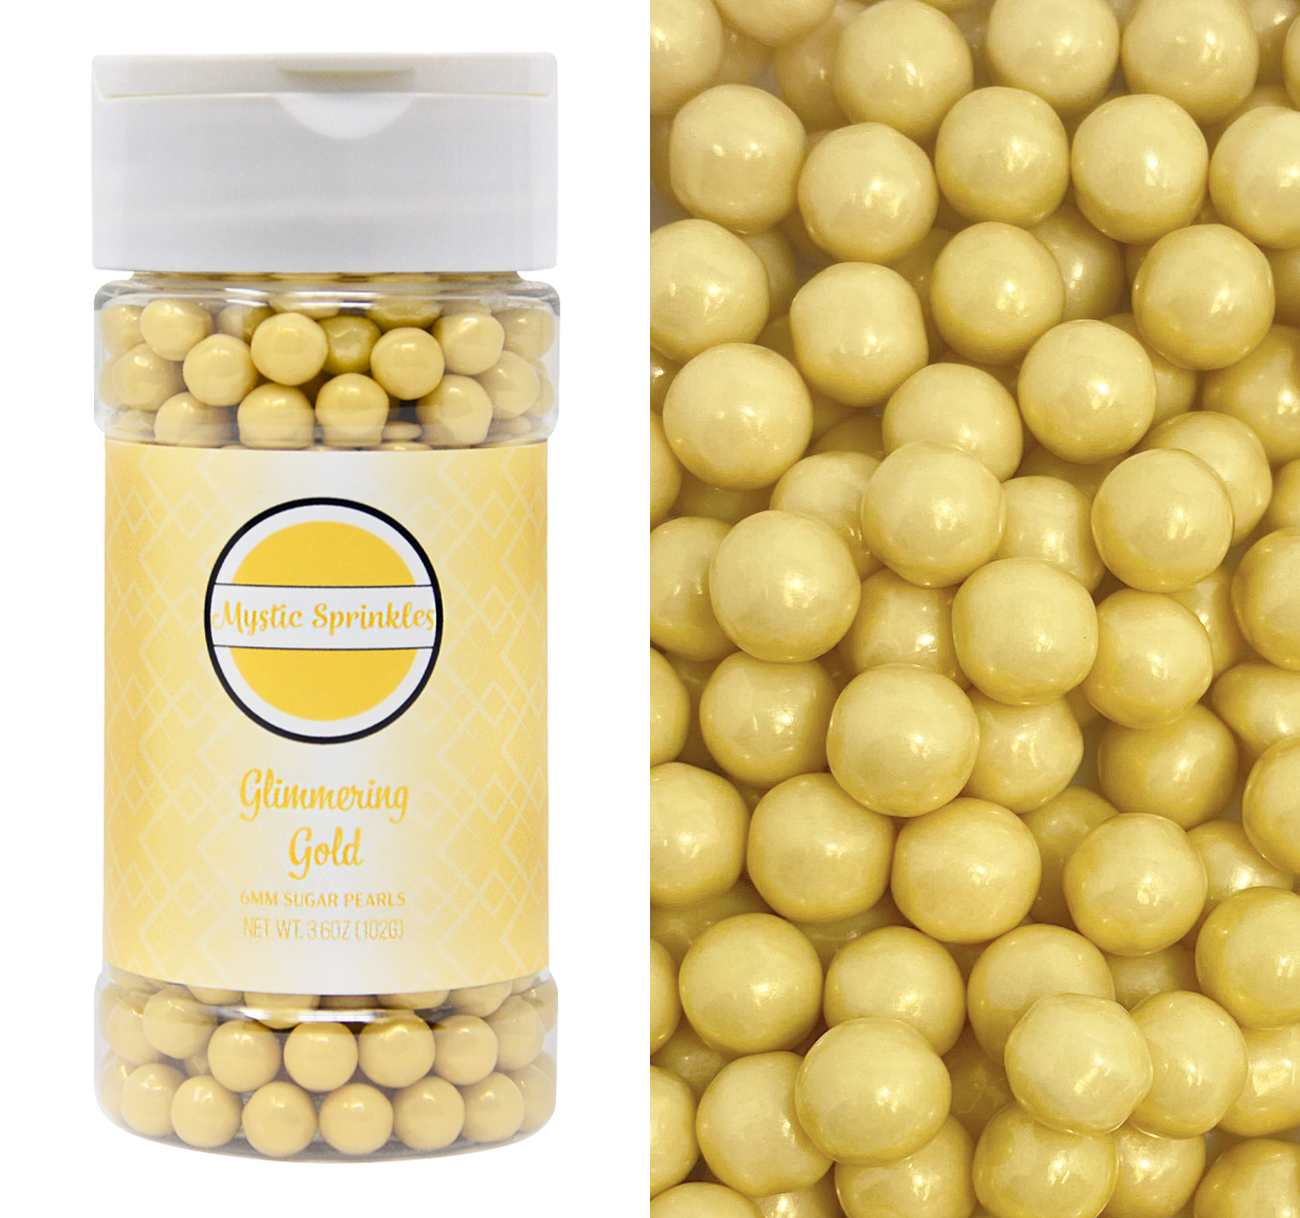 Glimmering Gold 6mm Sugar Pearls 3.6oz – Mystic Sprinkles